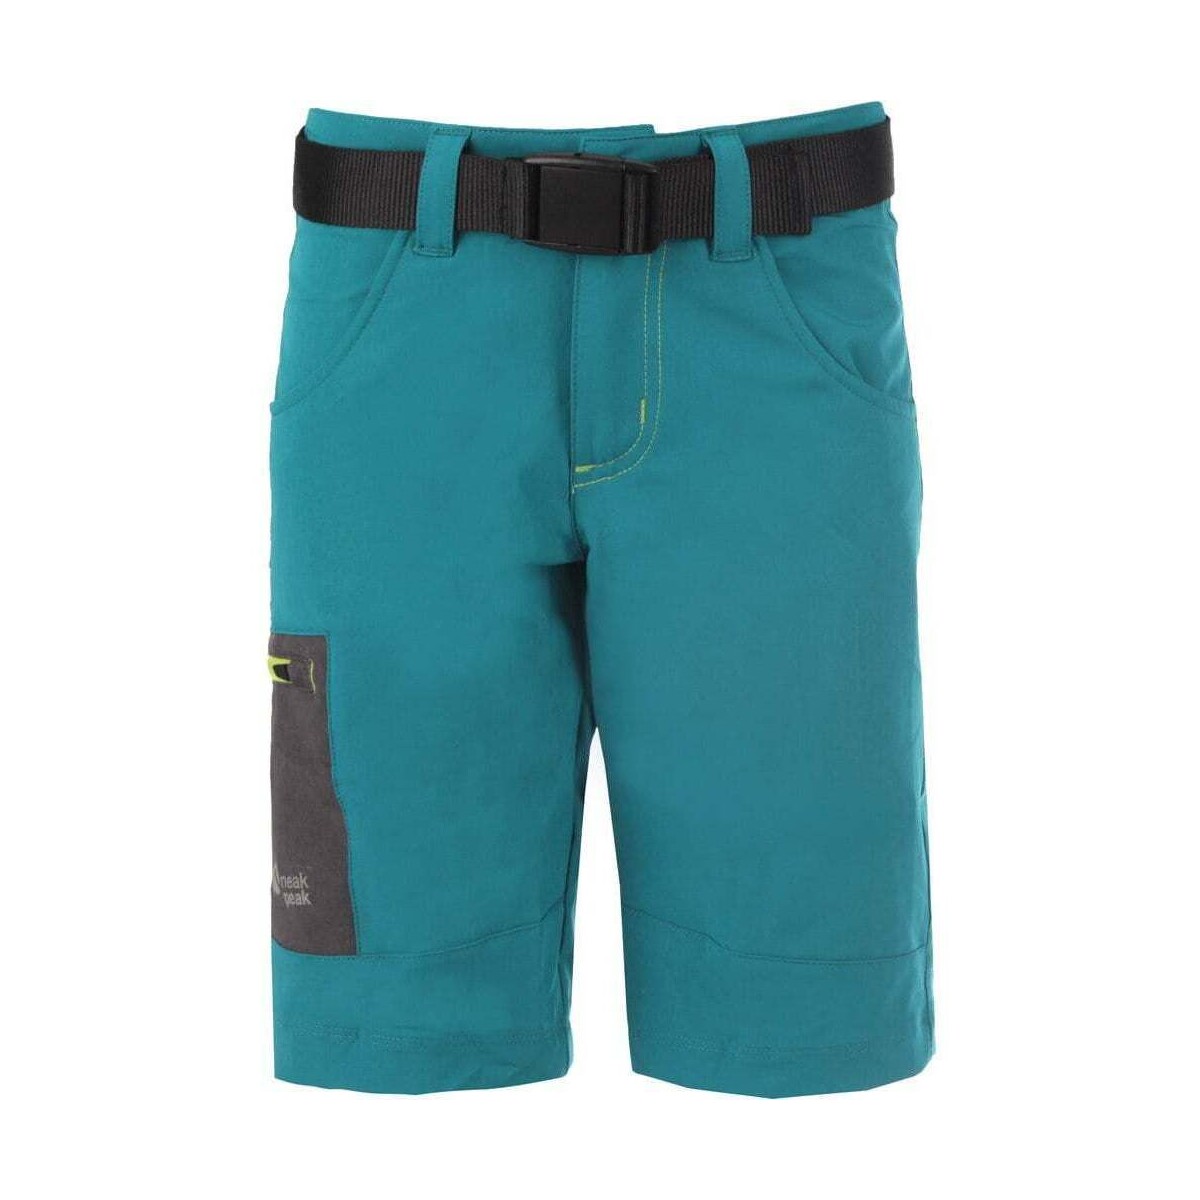 Vêtements Enfant Pantalons de survêtement Neak Peak TUTO BSF Bleu